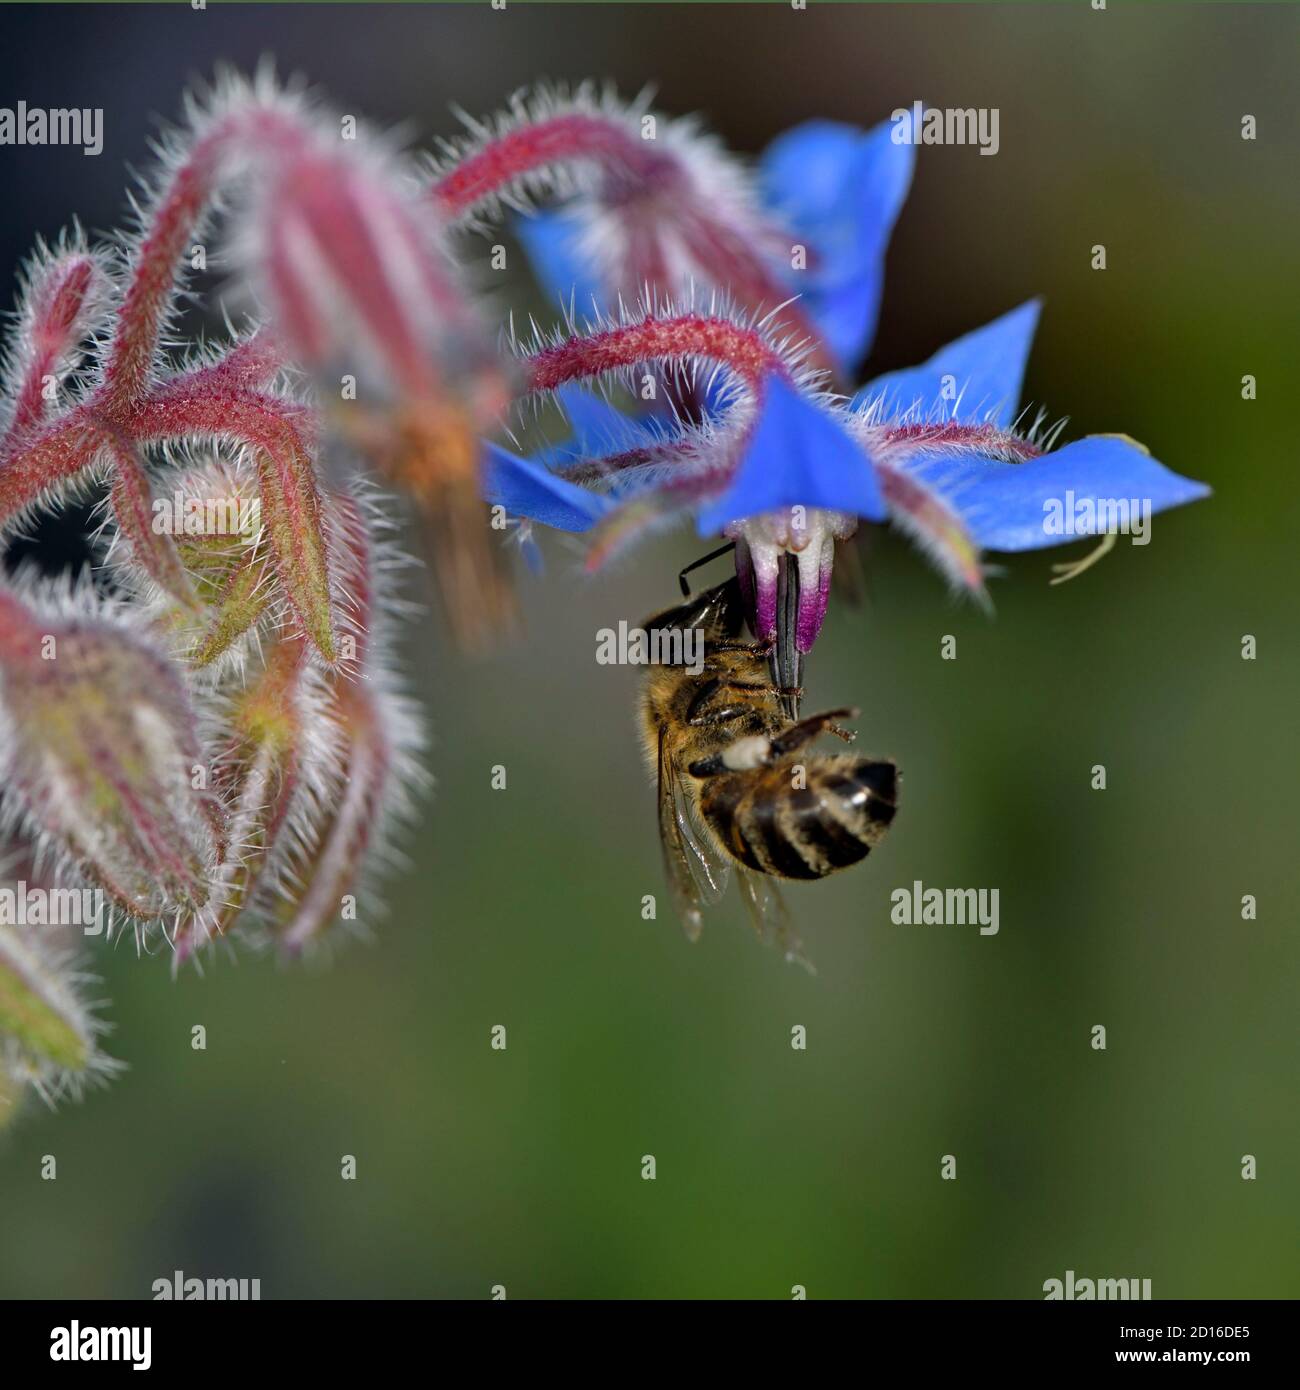 France, Territoire de Belfort, Belfort, vegetable garden, European bee (Apis melllifera) foraging on a borage flower (Borago officinalis)) Stock Photo